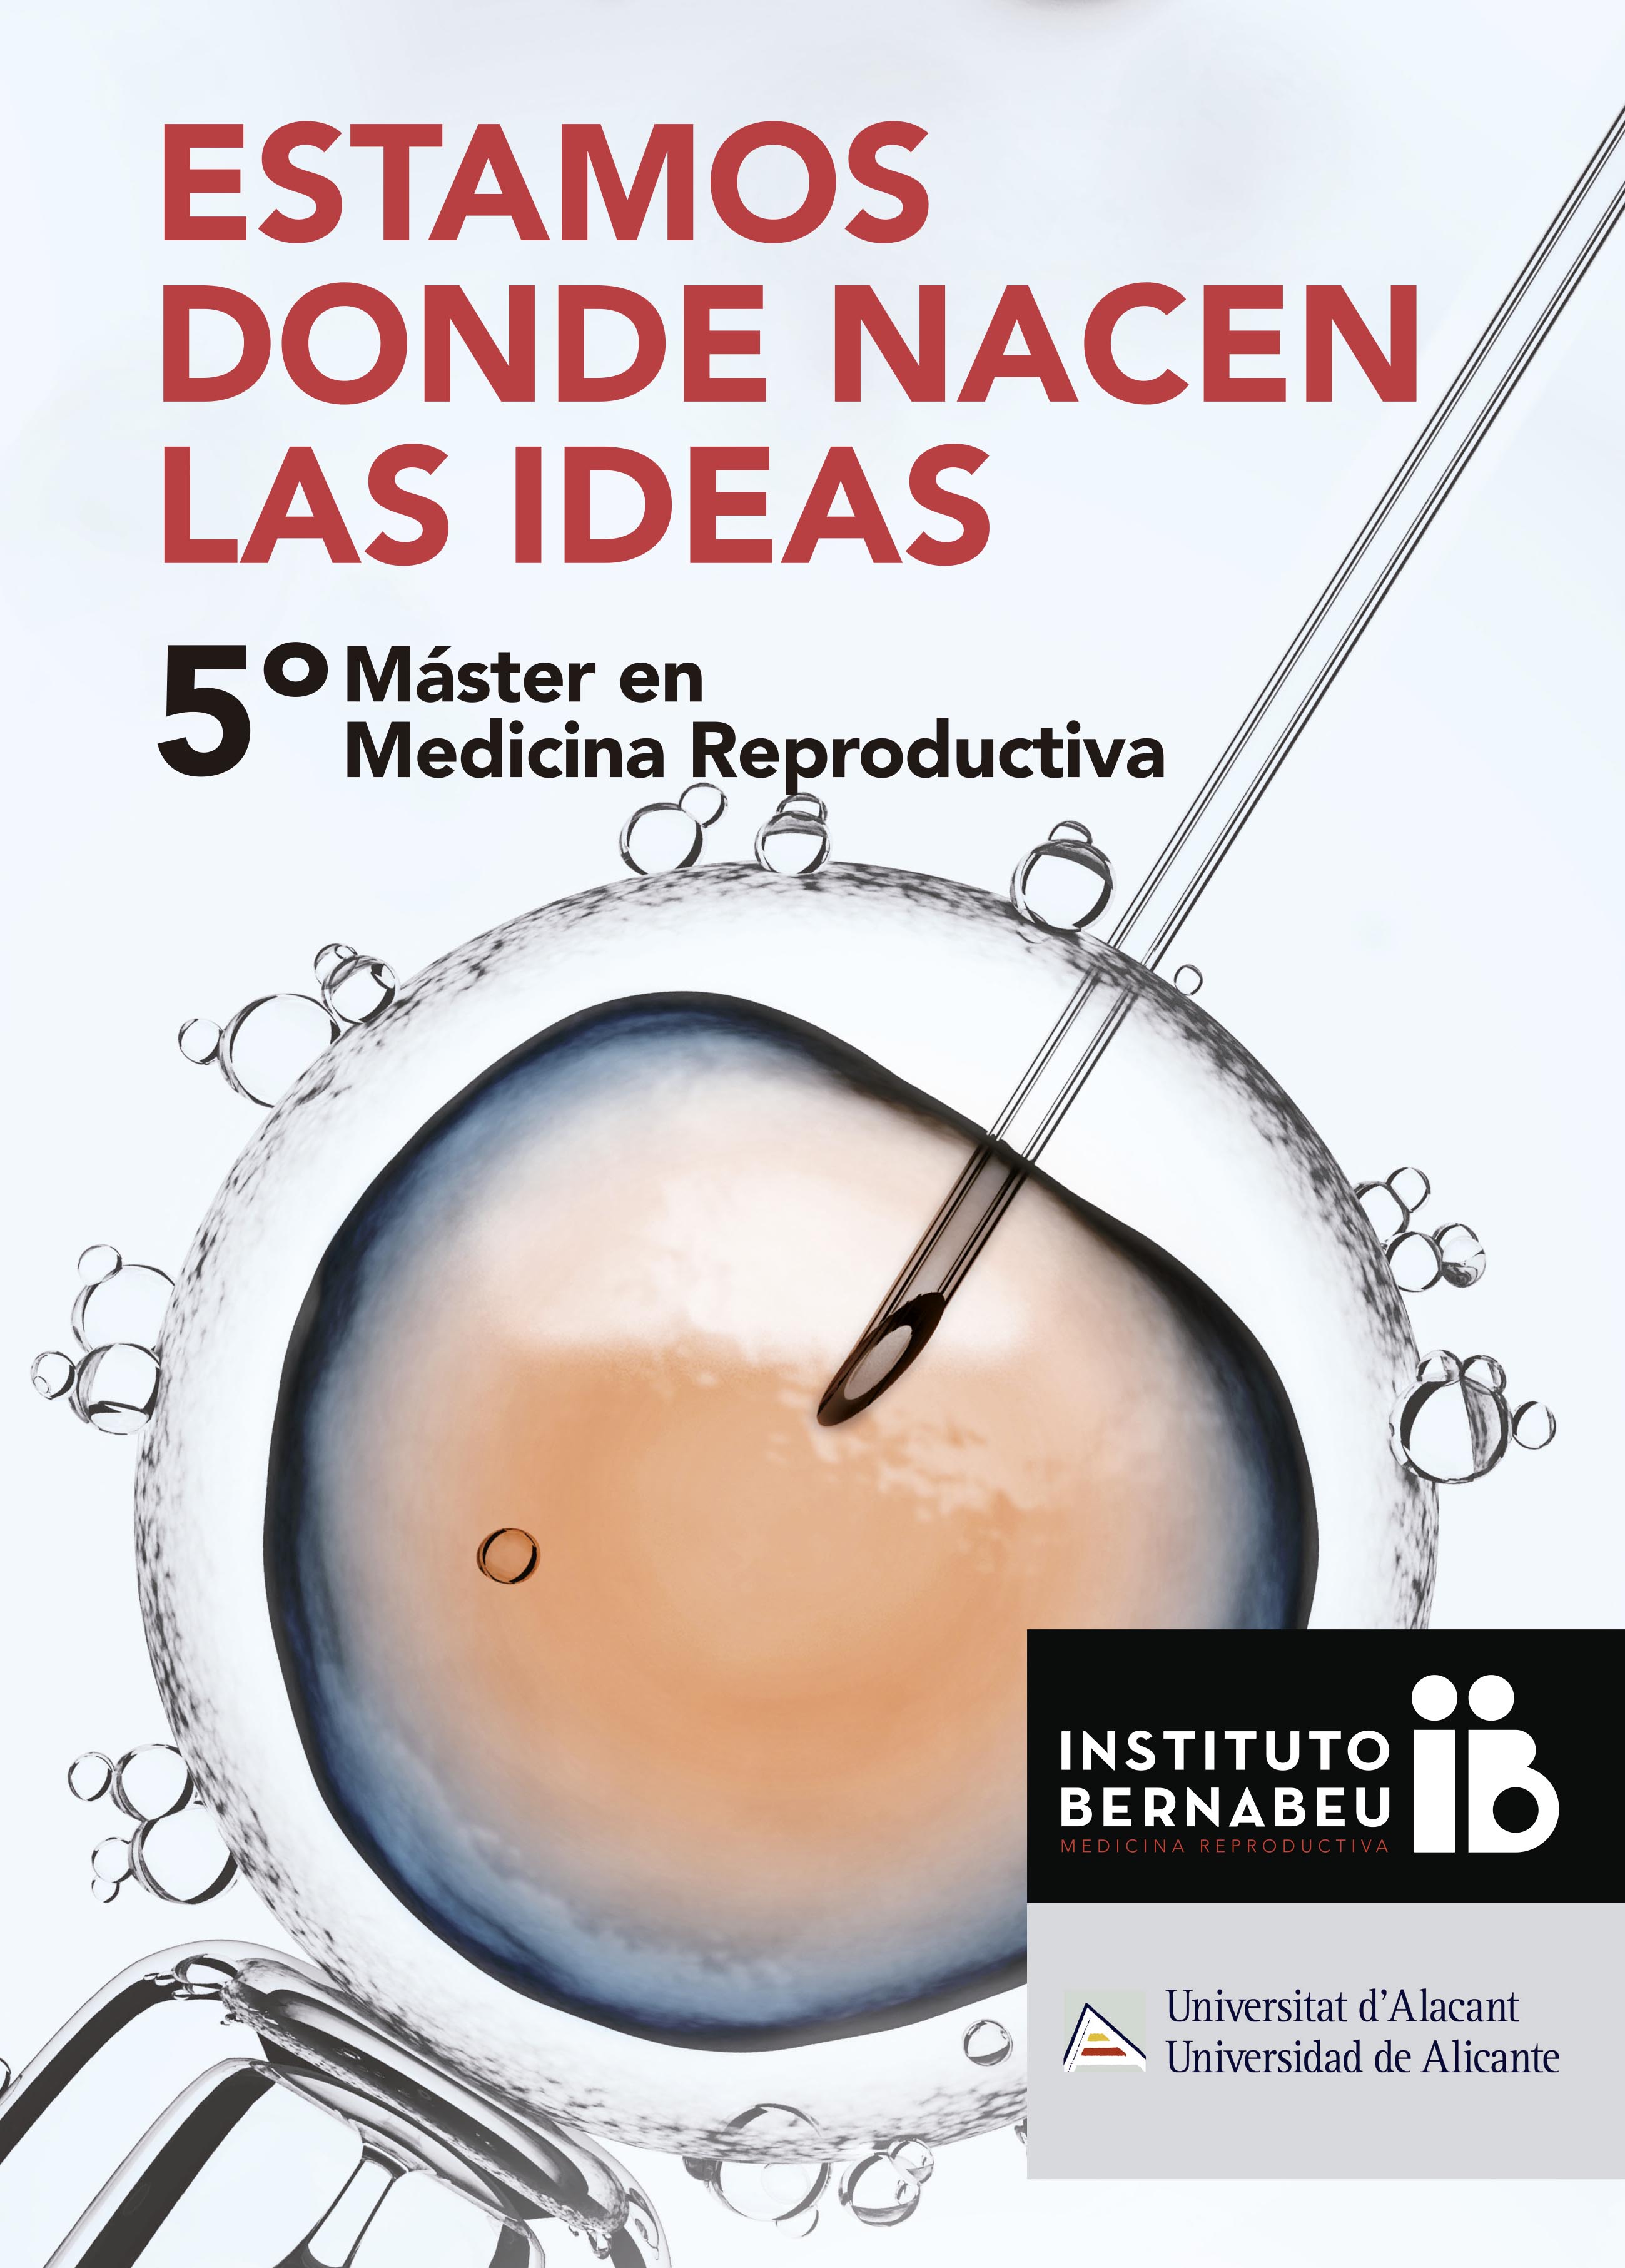 V Instituto Bernabeu-University of Alicante Master’s Degree in Reproductive Medicine